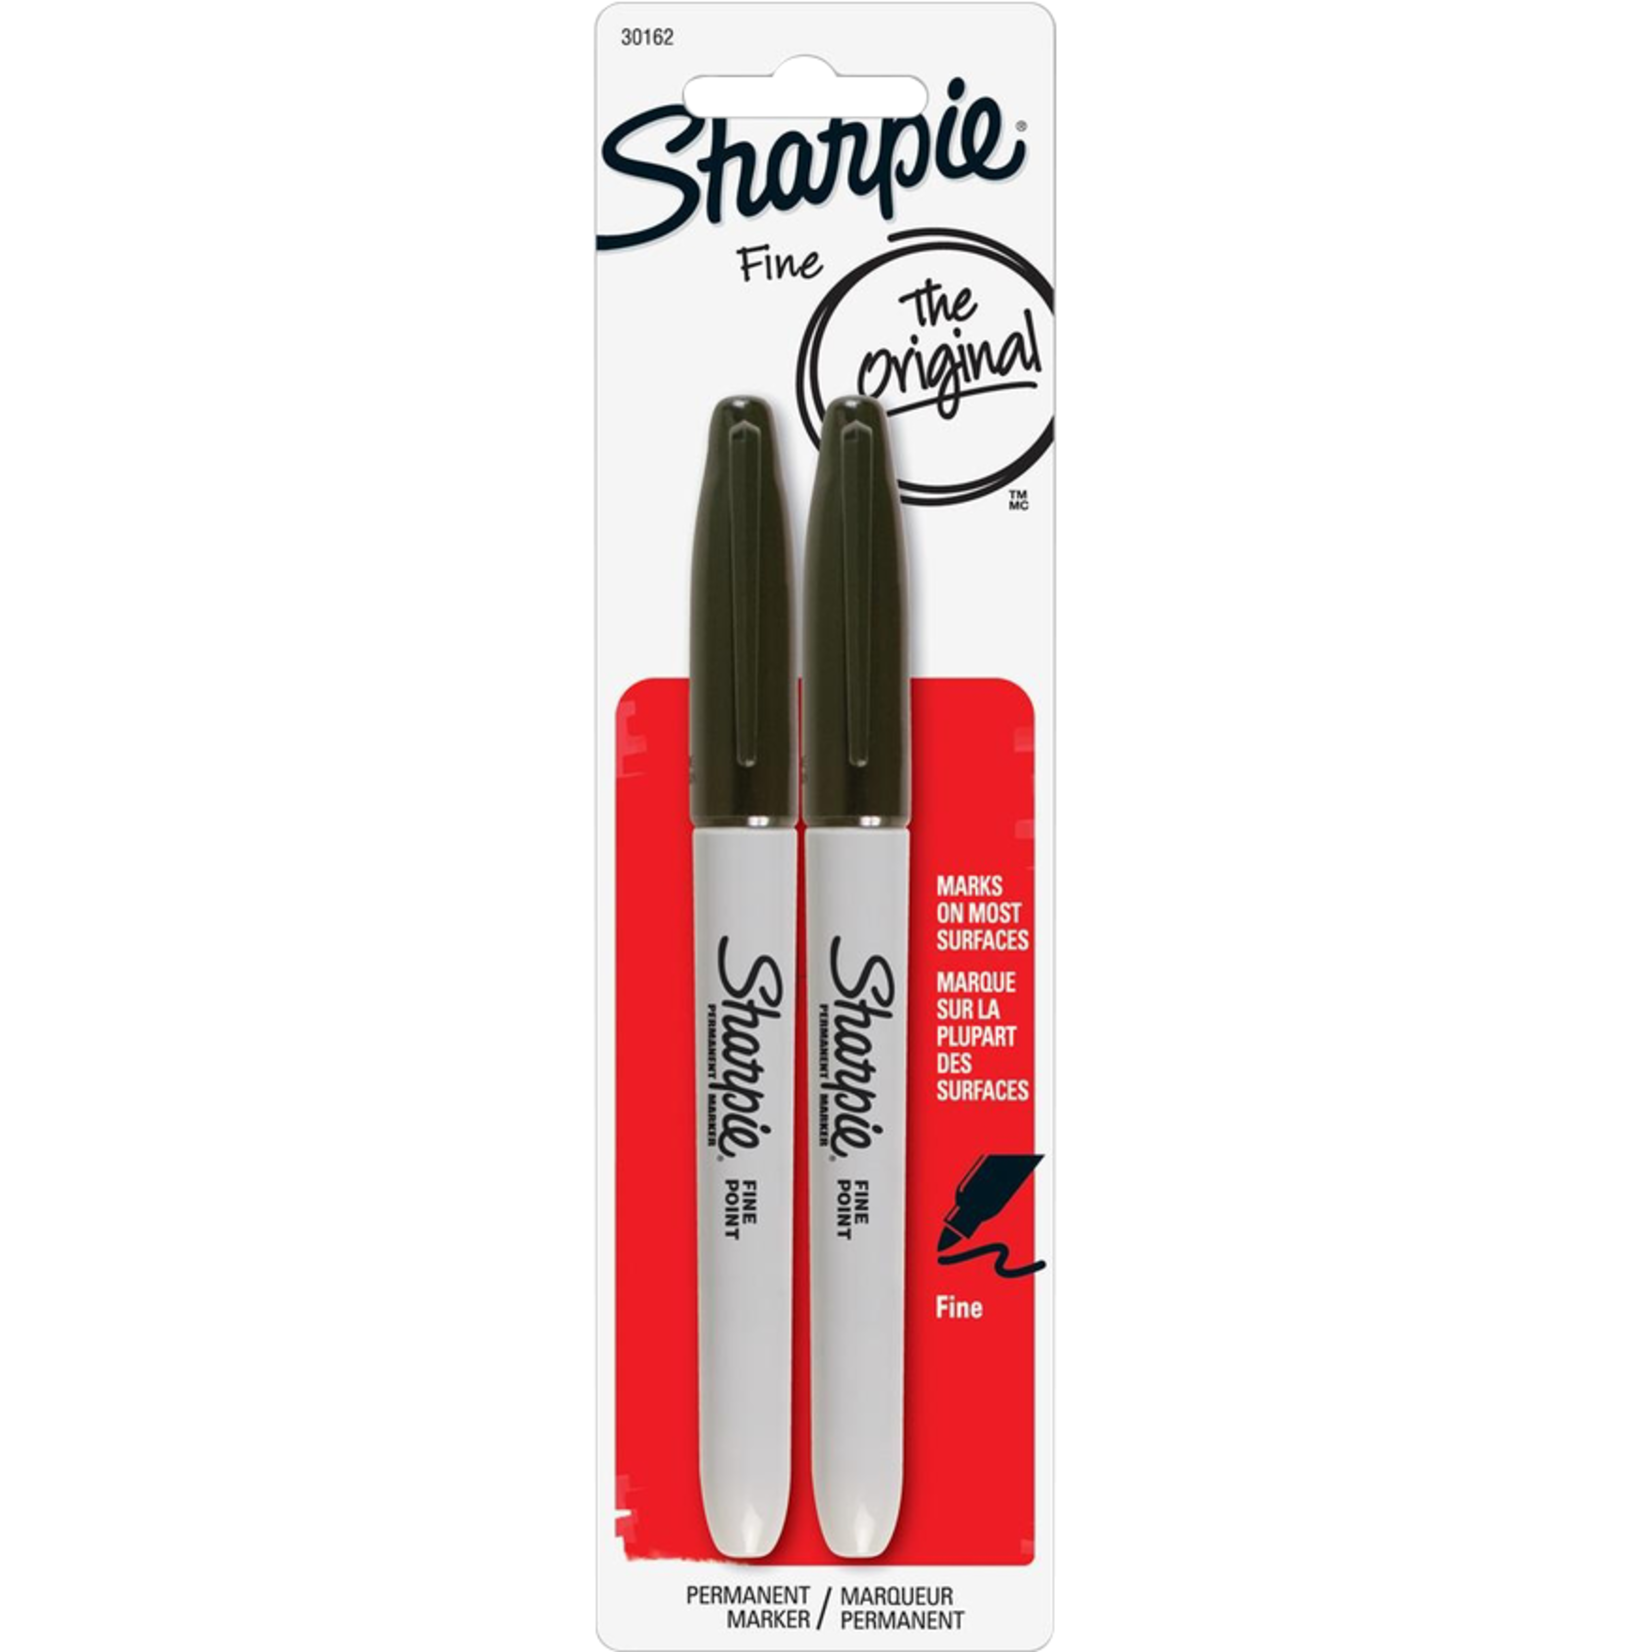 Sharpie Sharpie Permanent Marker Two Pack